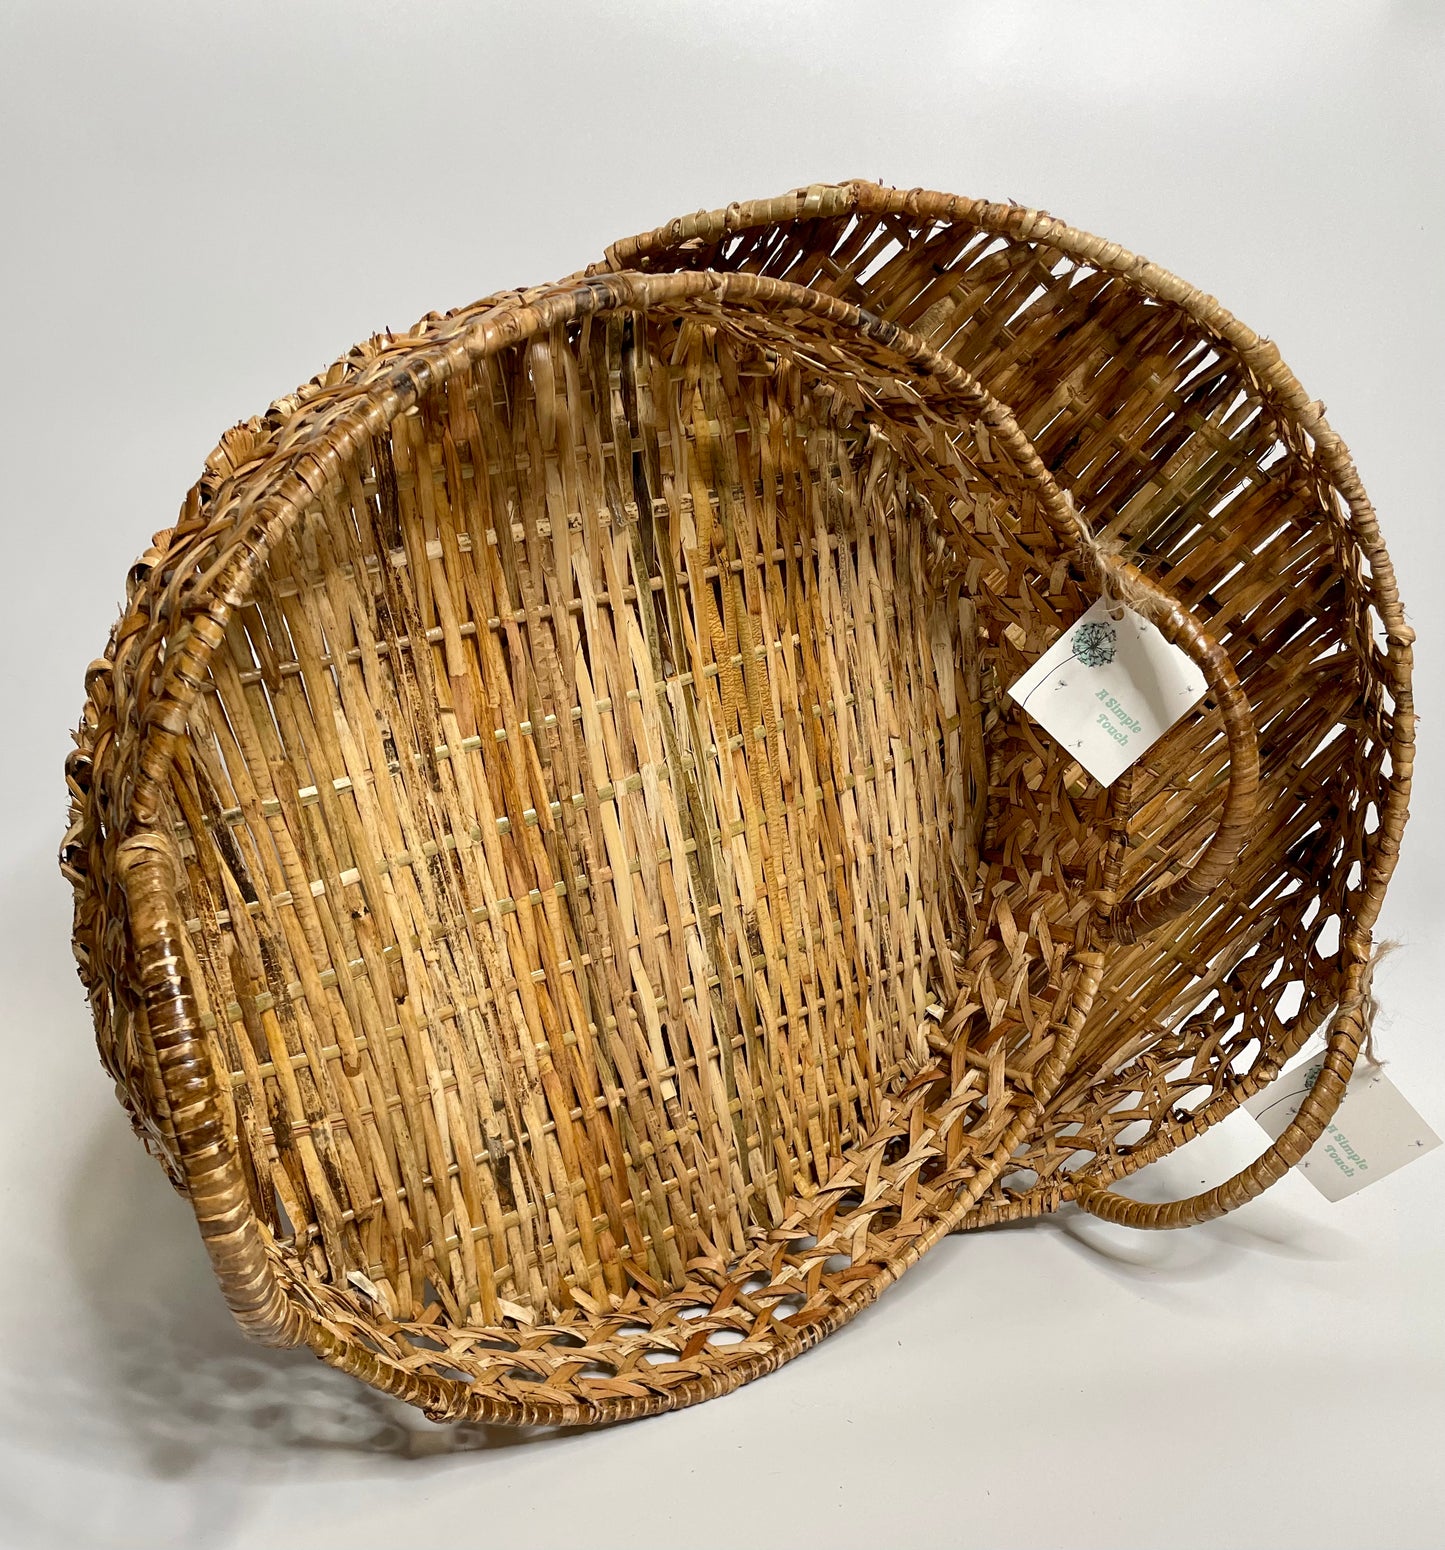 The Magnolia Basket